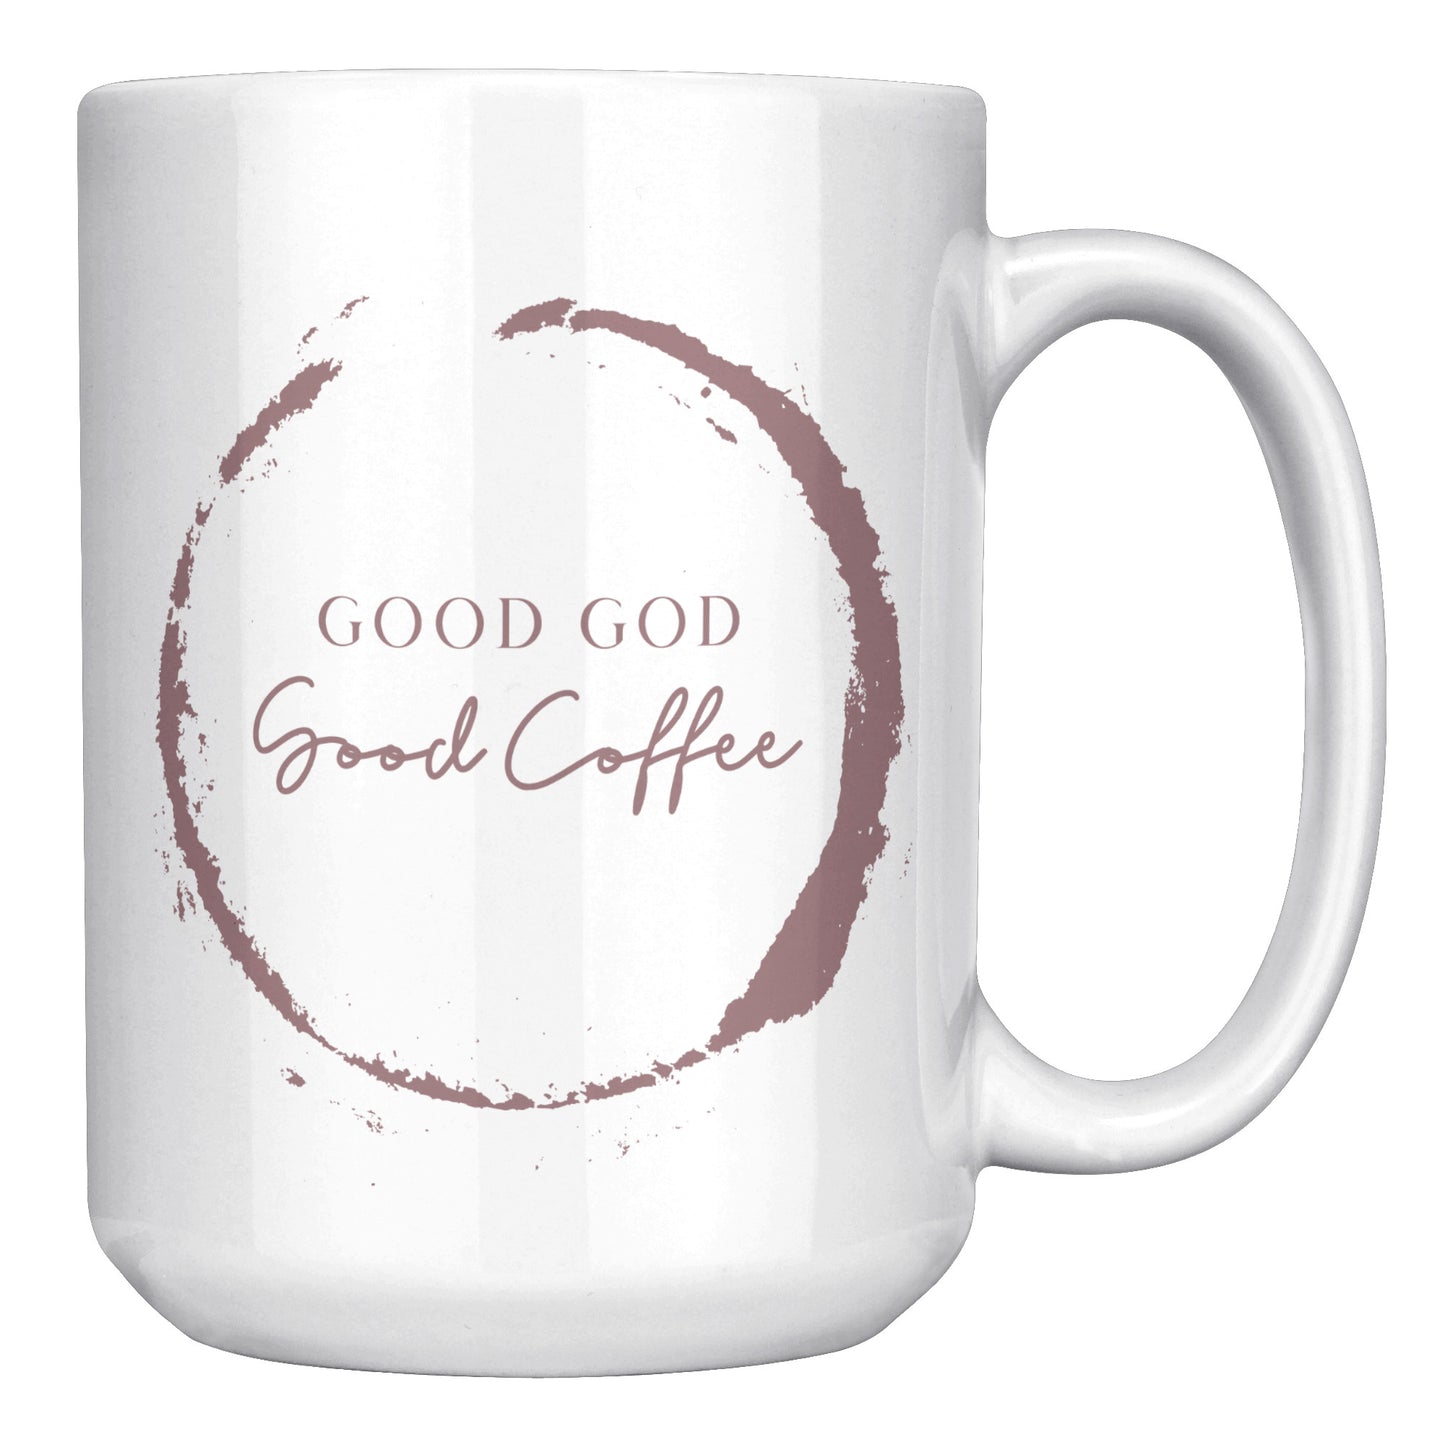 Good God Good Coffee Ceramic White Mug